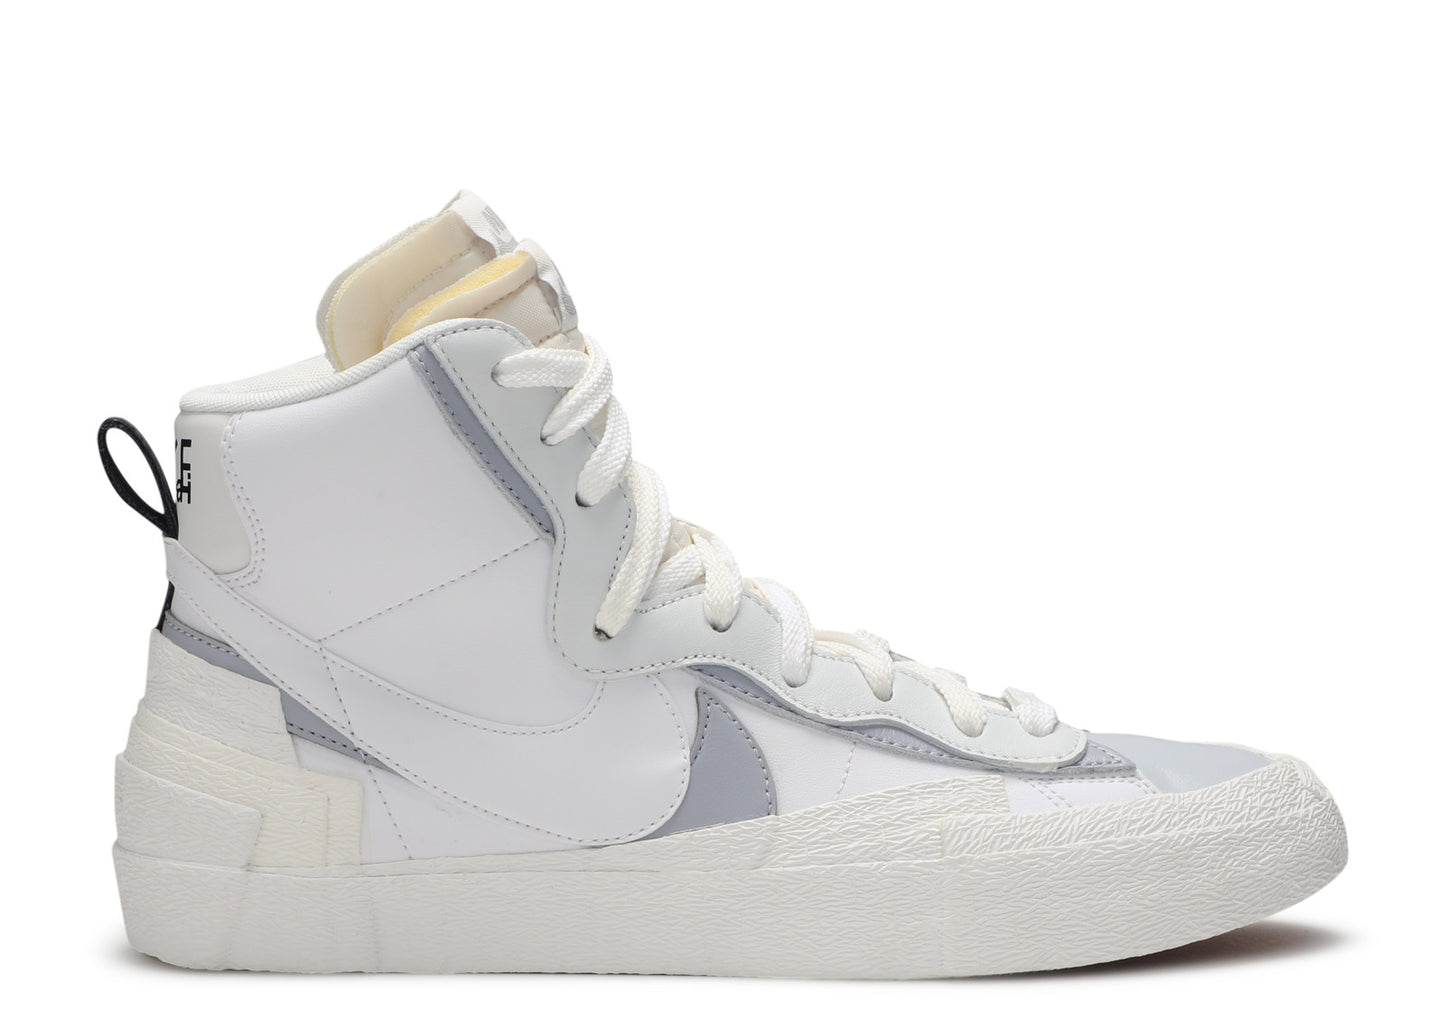 Sacai x Nike Blazer Mid "White/Grey"